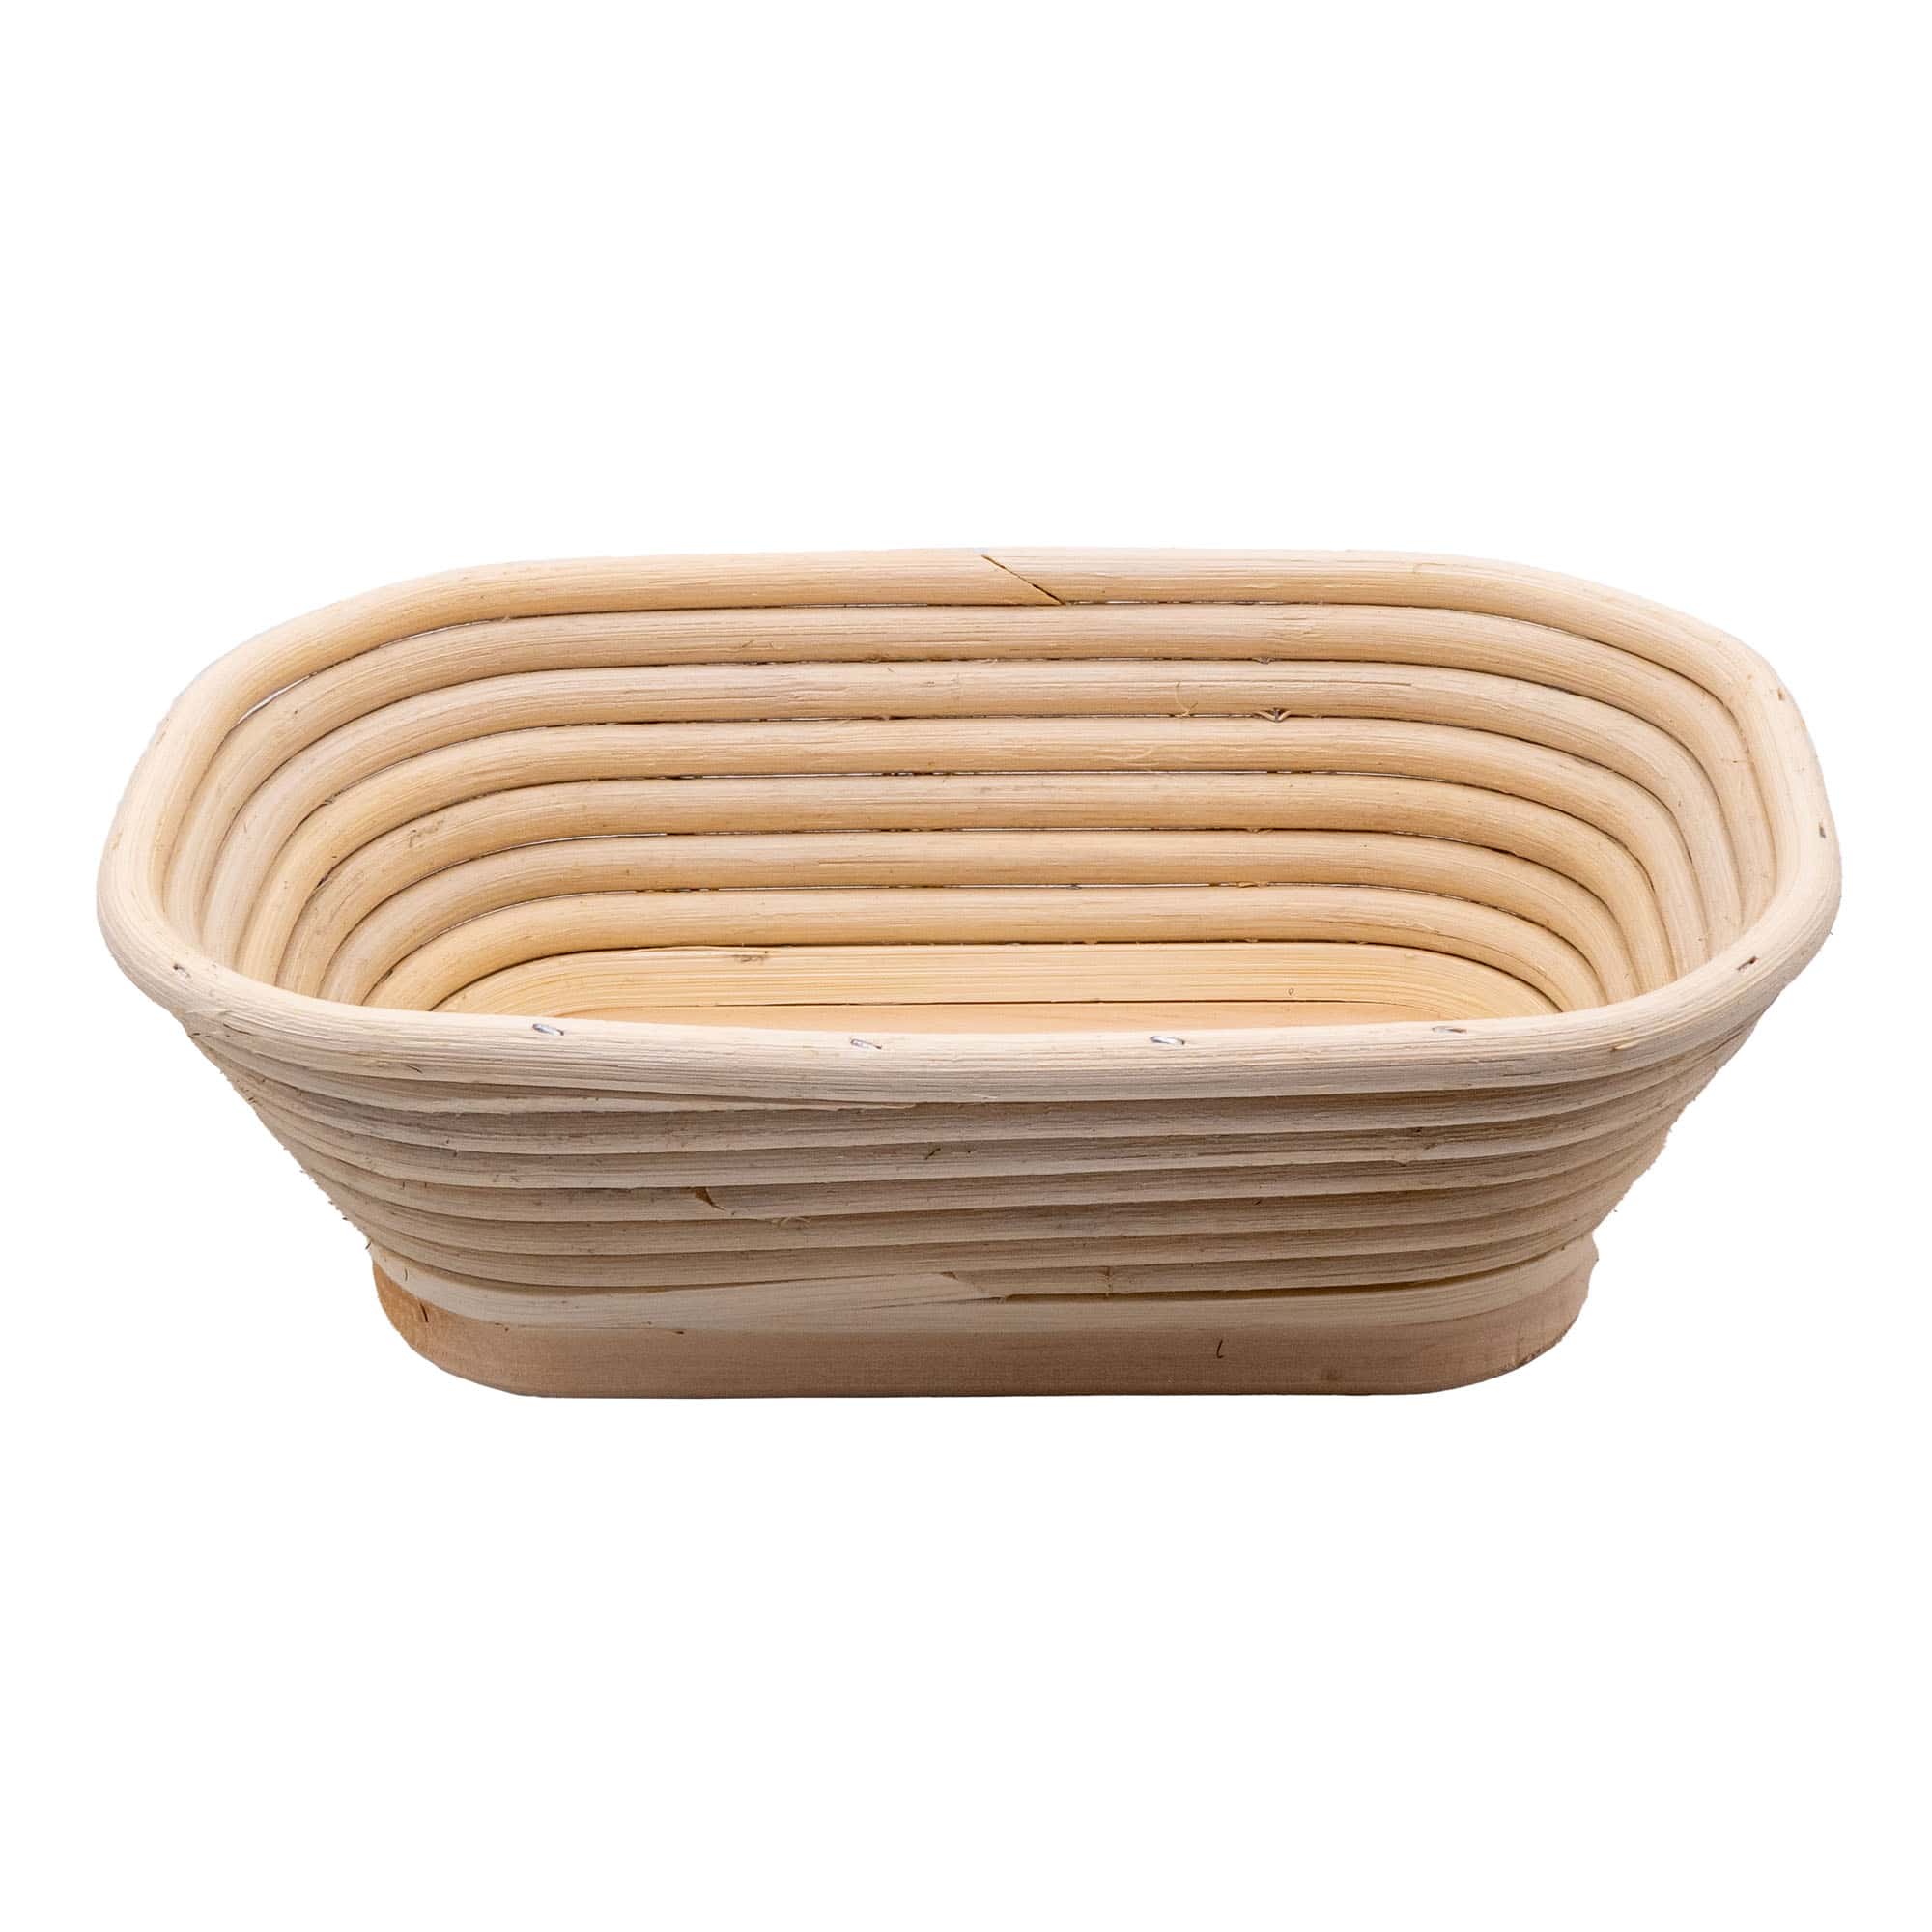 Gärkorb Brotform Peddigrohr mit Holzboden 1,0 kg lang 